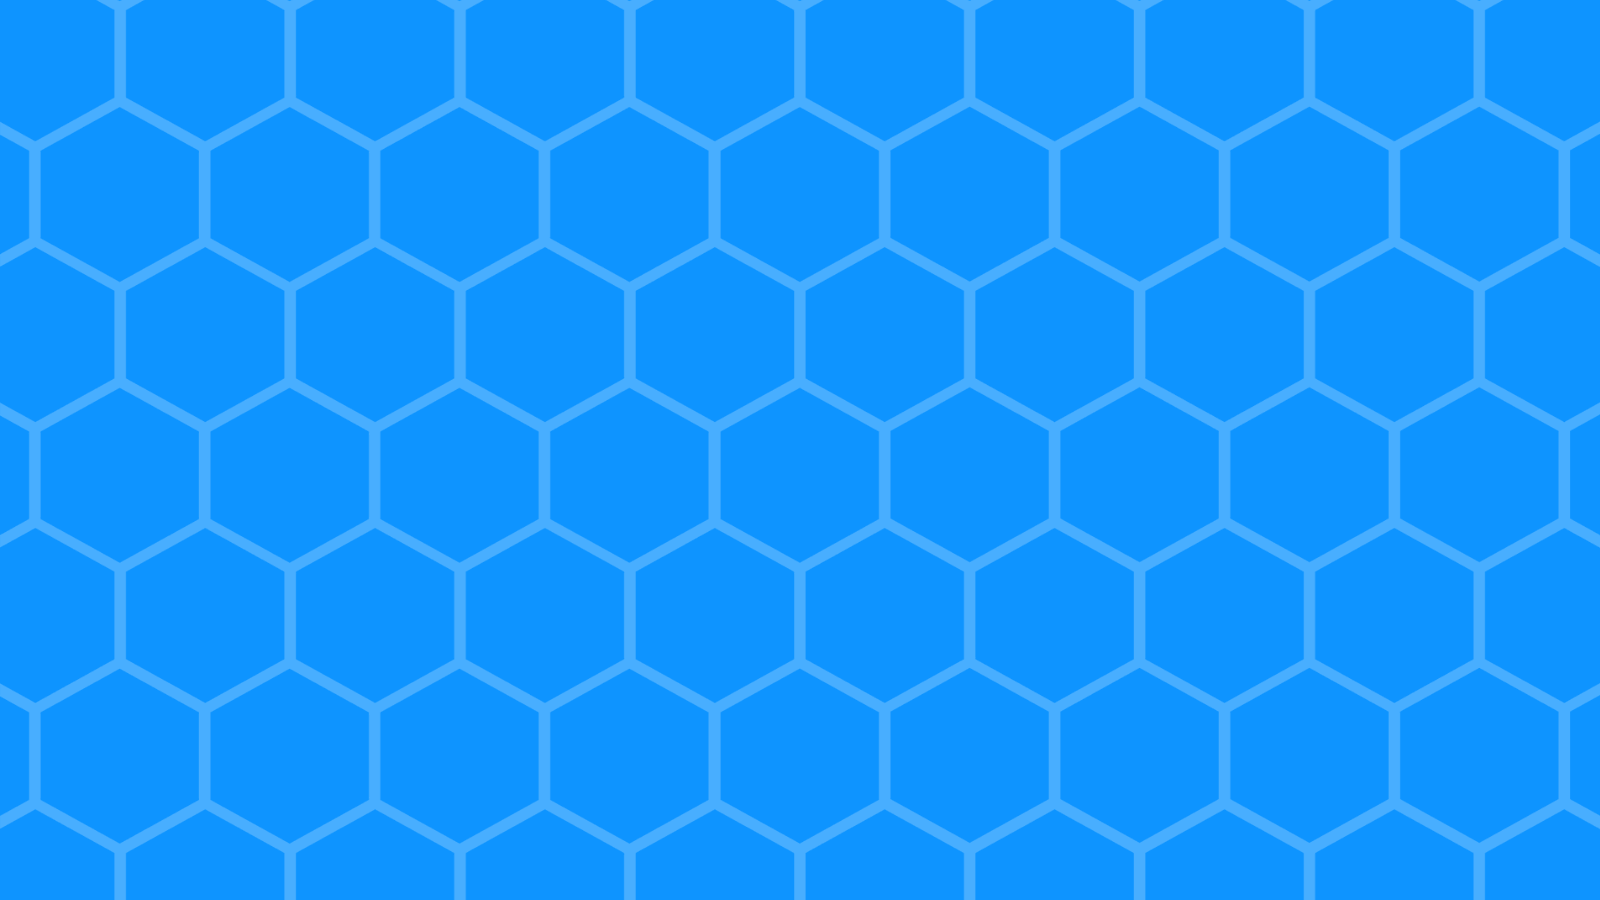 A blue hexagon pattern background